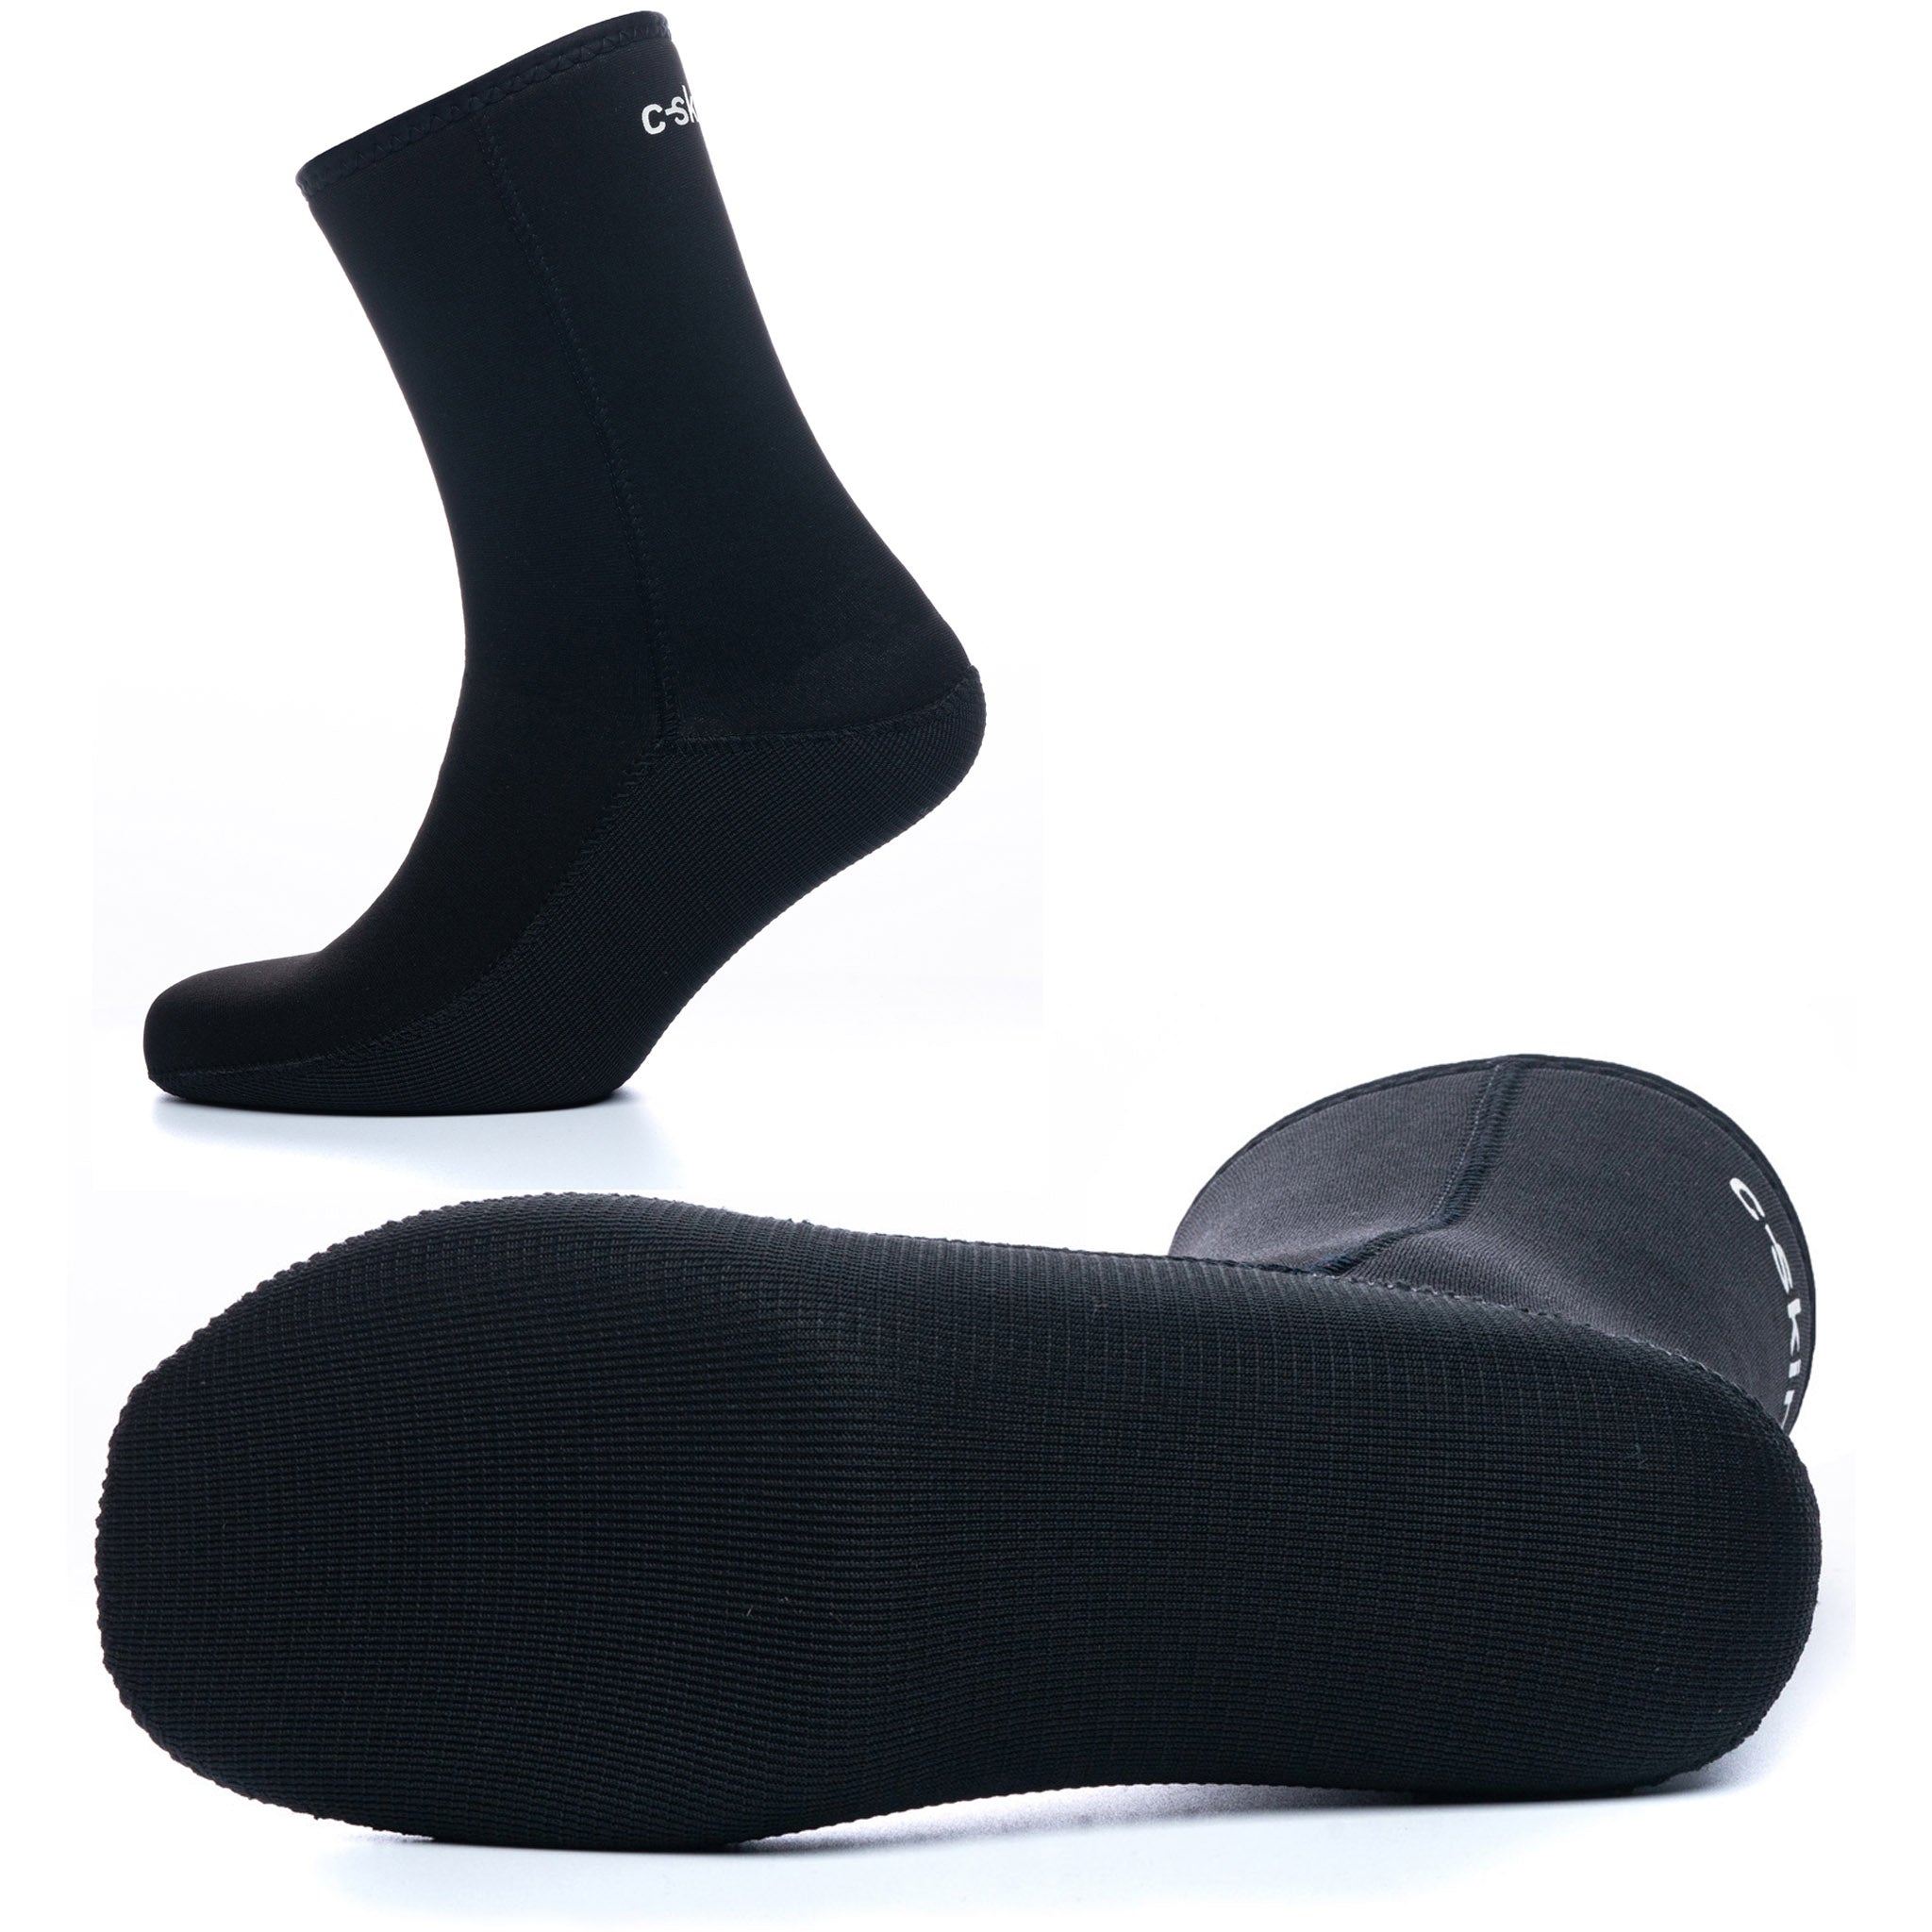 C-Skins 4mm Thermal PolyPro Socks Watersports